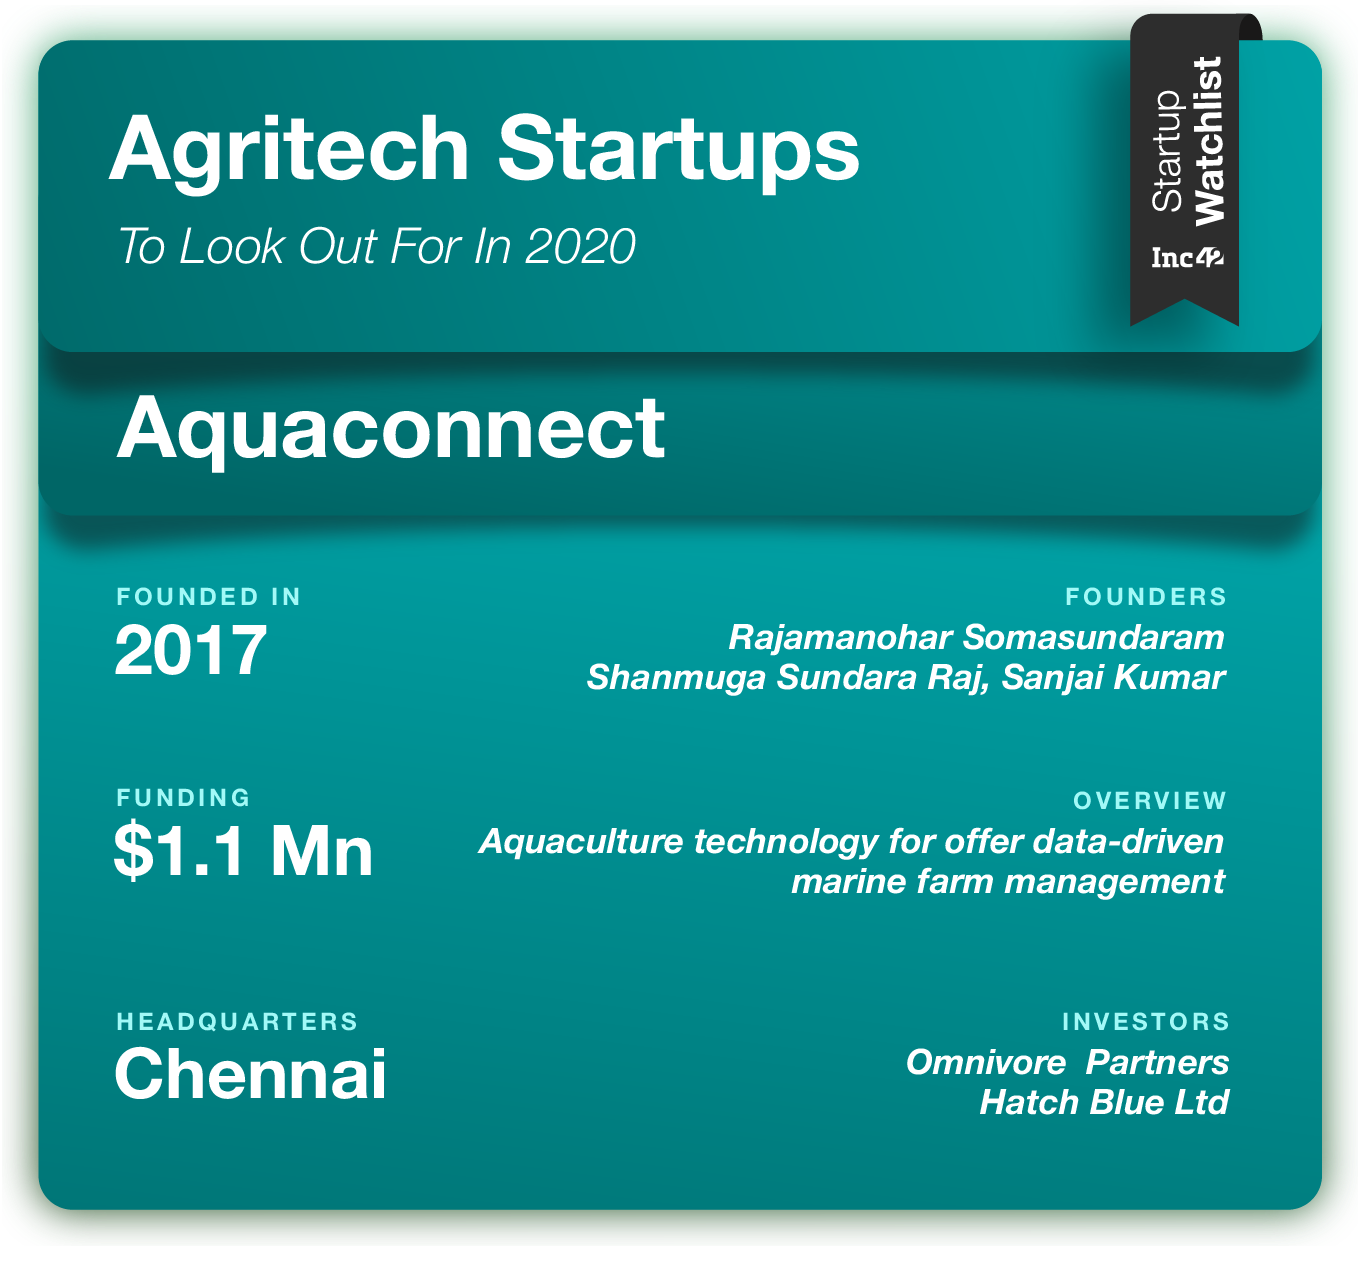 Aquaconnect agritech startups